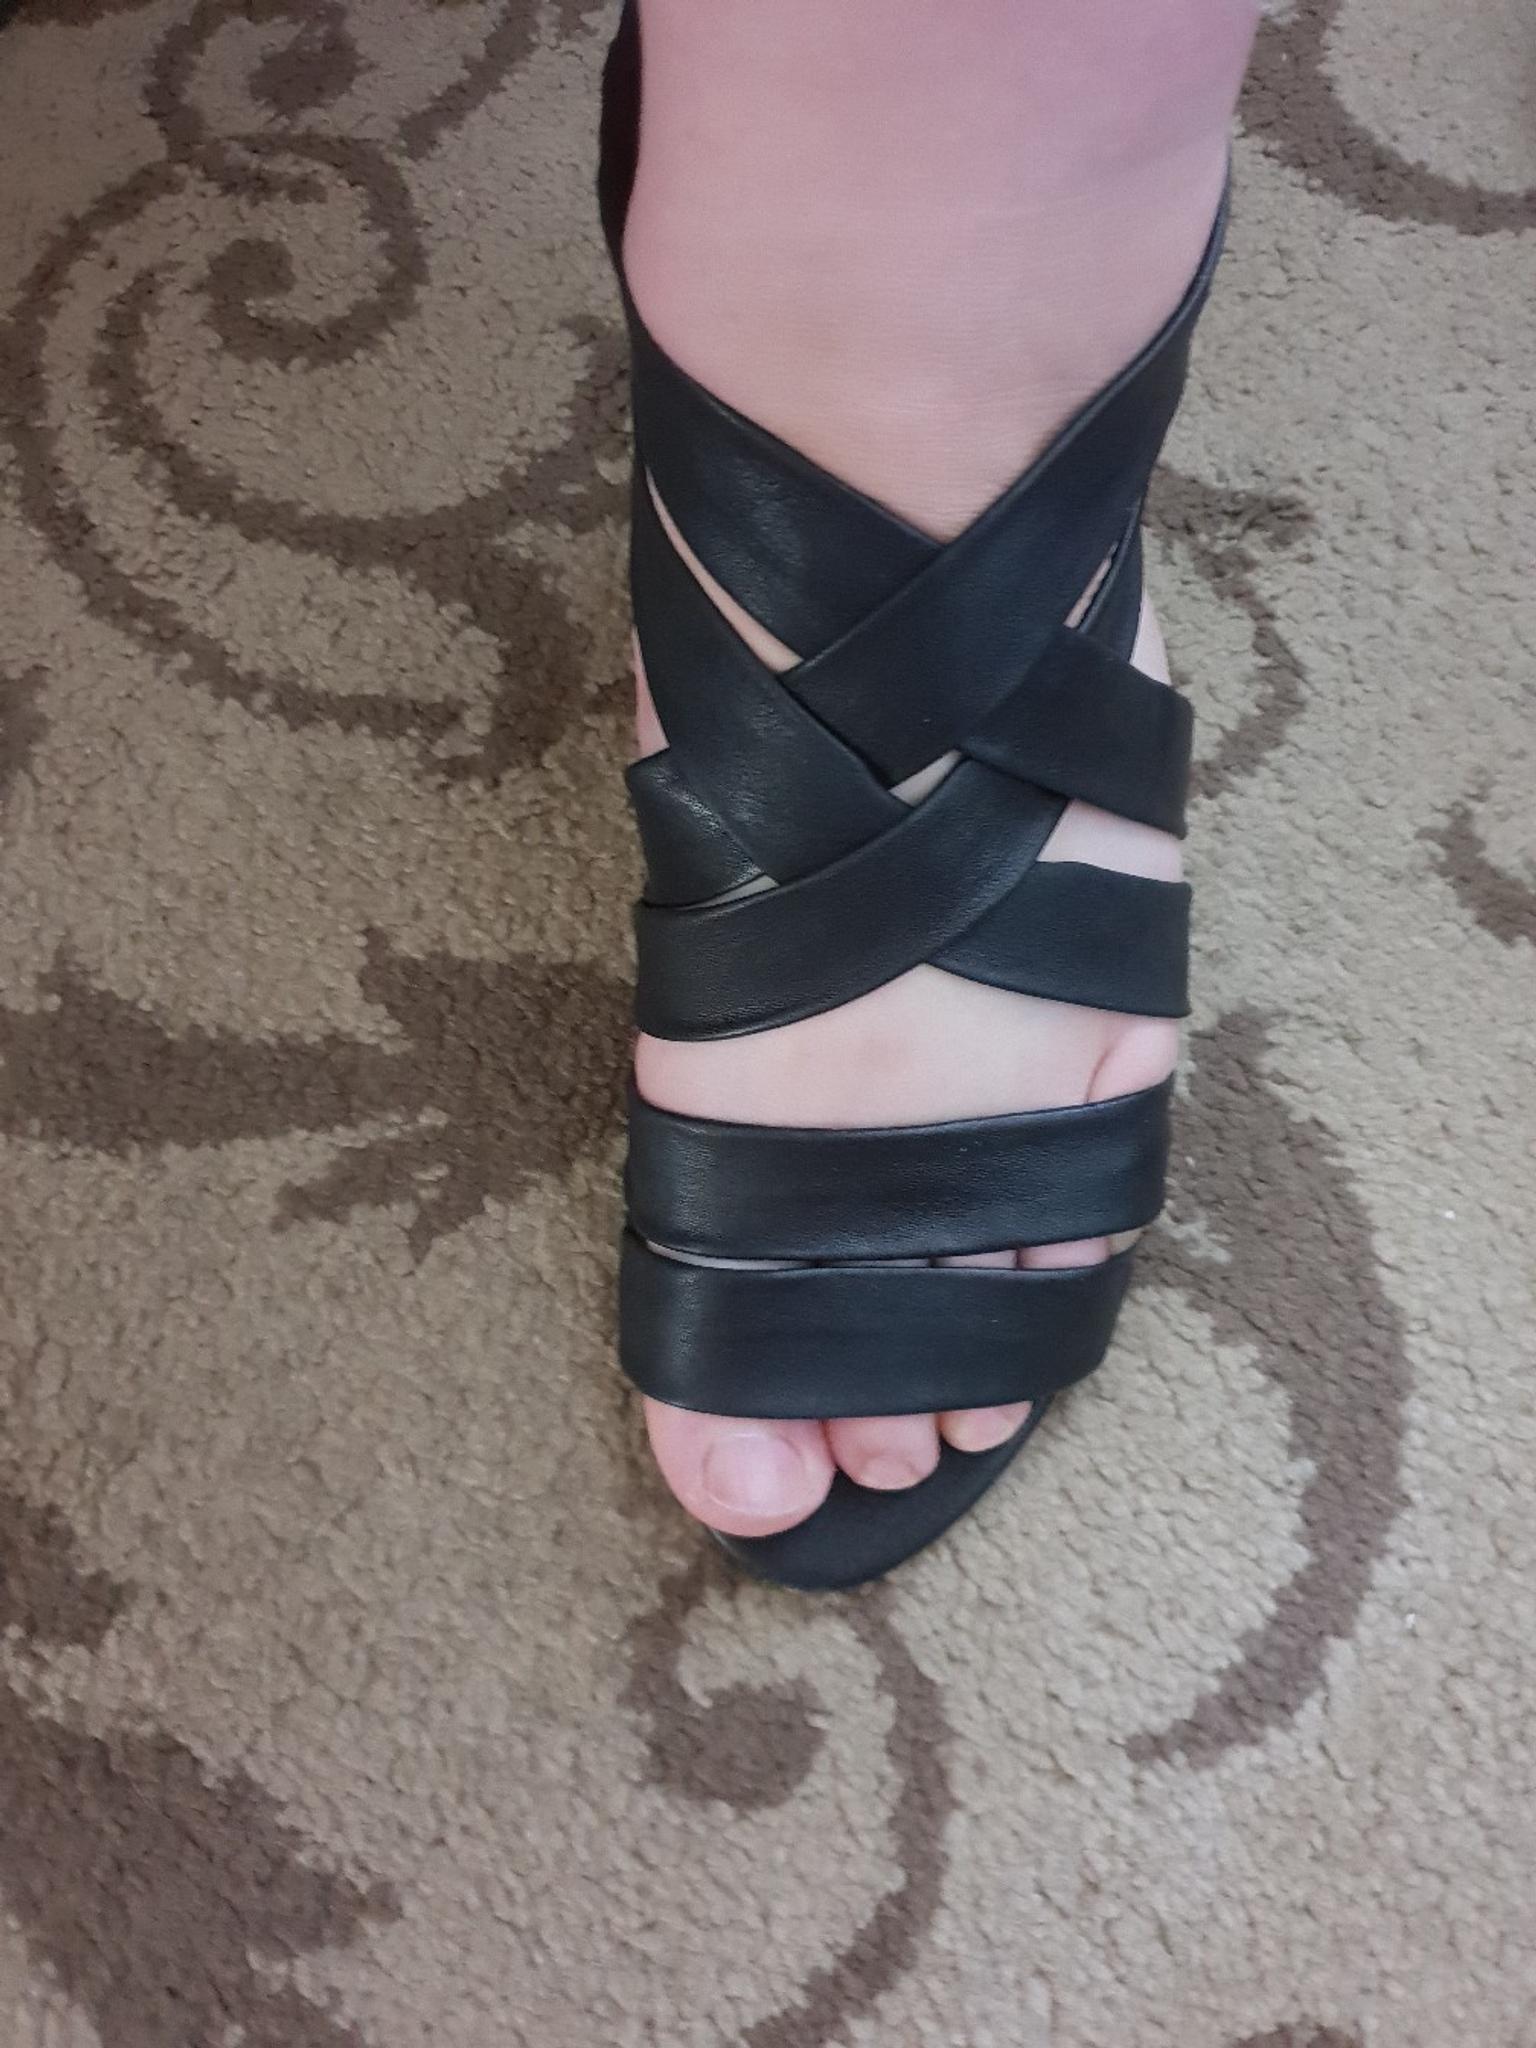 clarks gladiator sandals uk